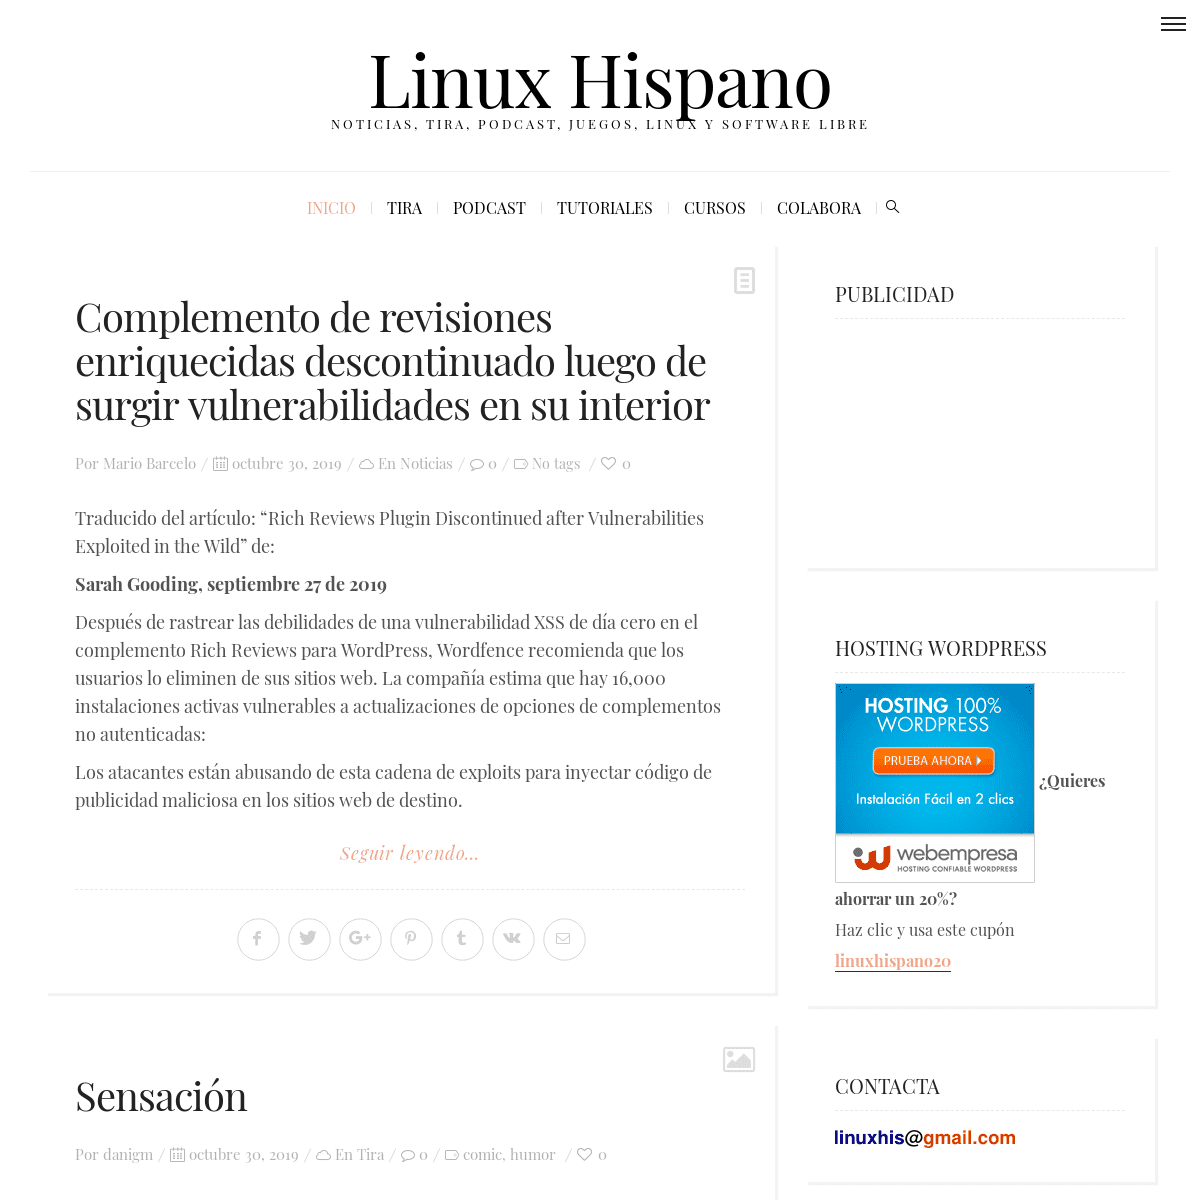 A complete backup of linuxhispano.net